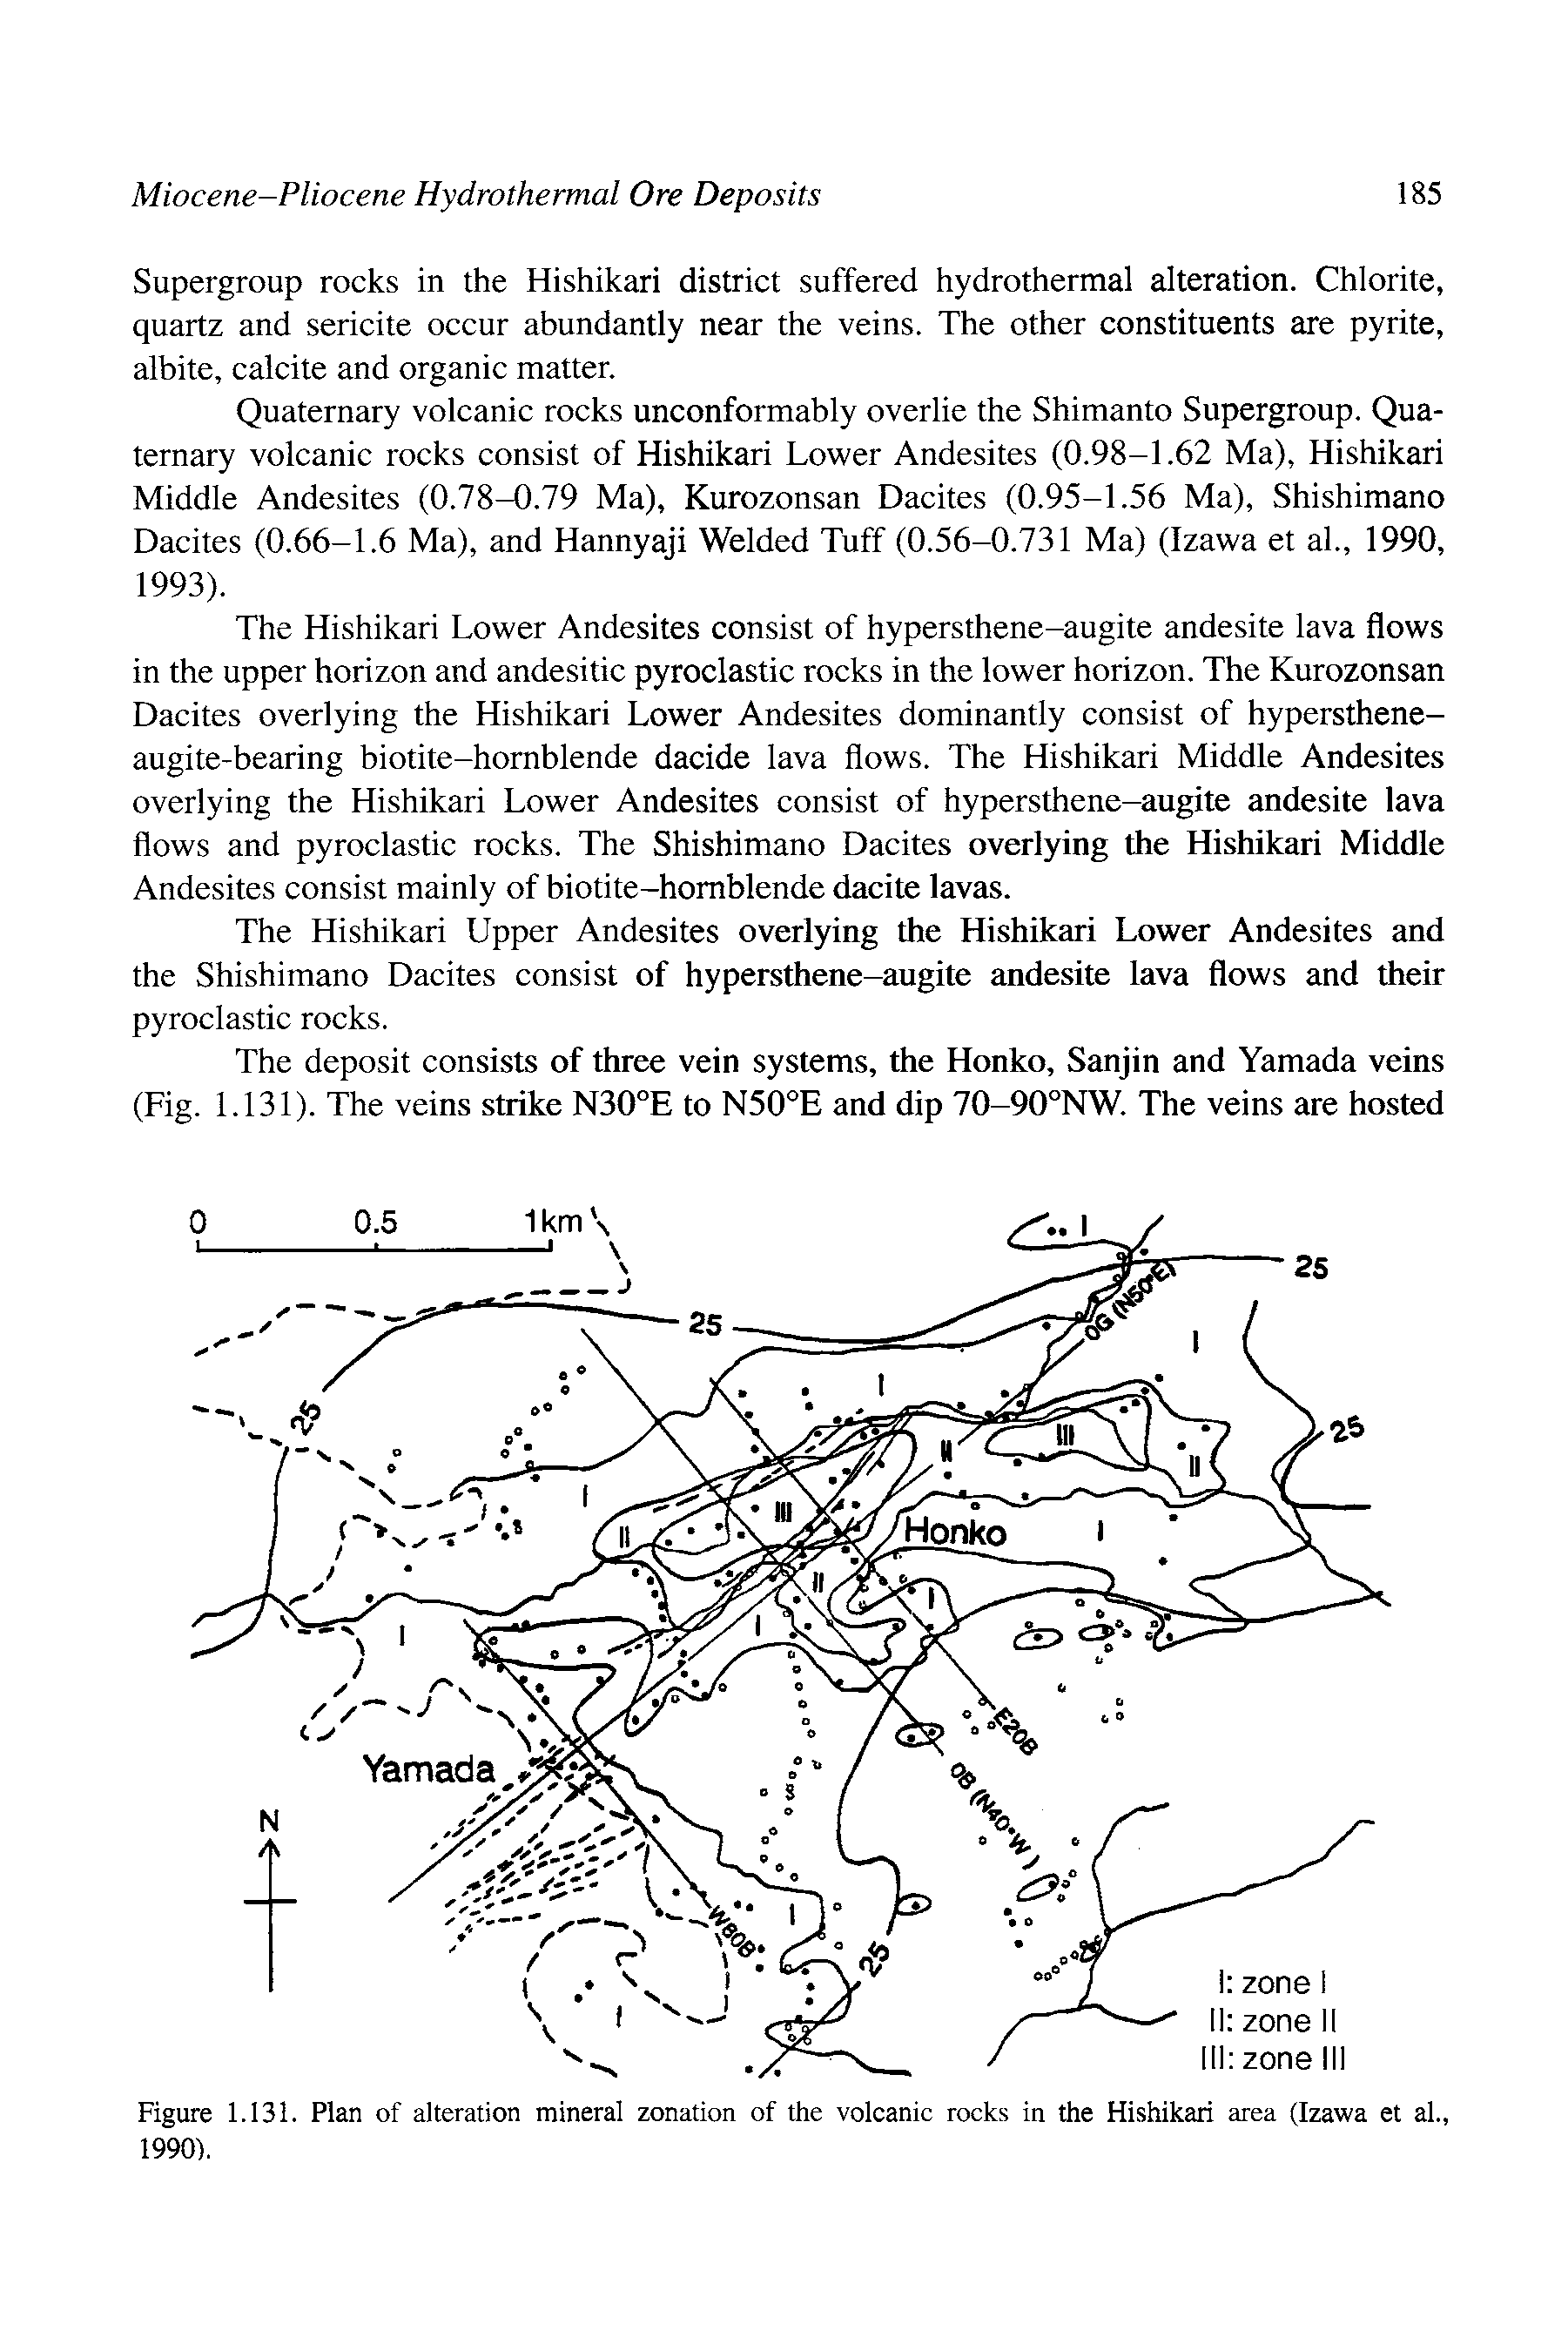 Figure 1.131. Plan of alteration mineral zonation of the volcanic rocks in the Hishikari area (Izawa et al., 1990).